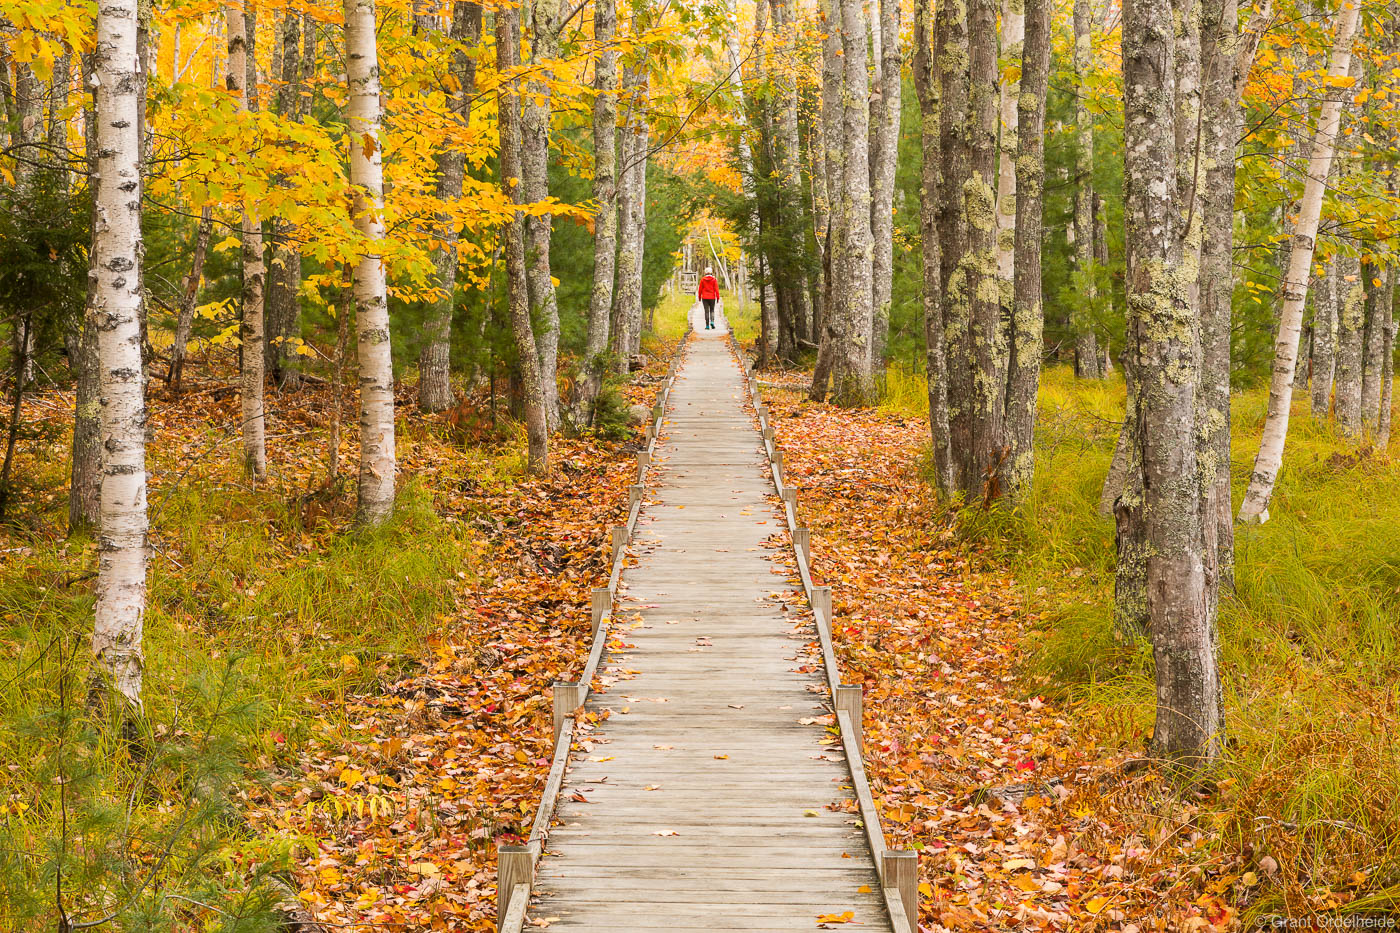 A person walking through the autumn foliage of Acadia National Park.